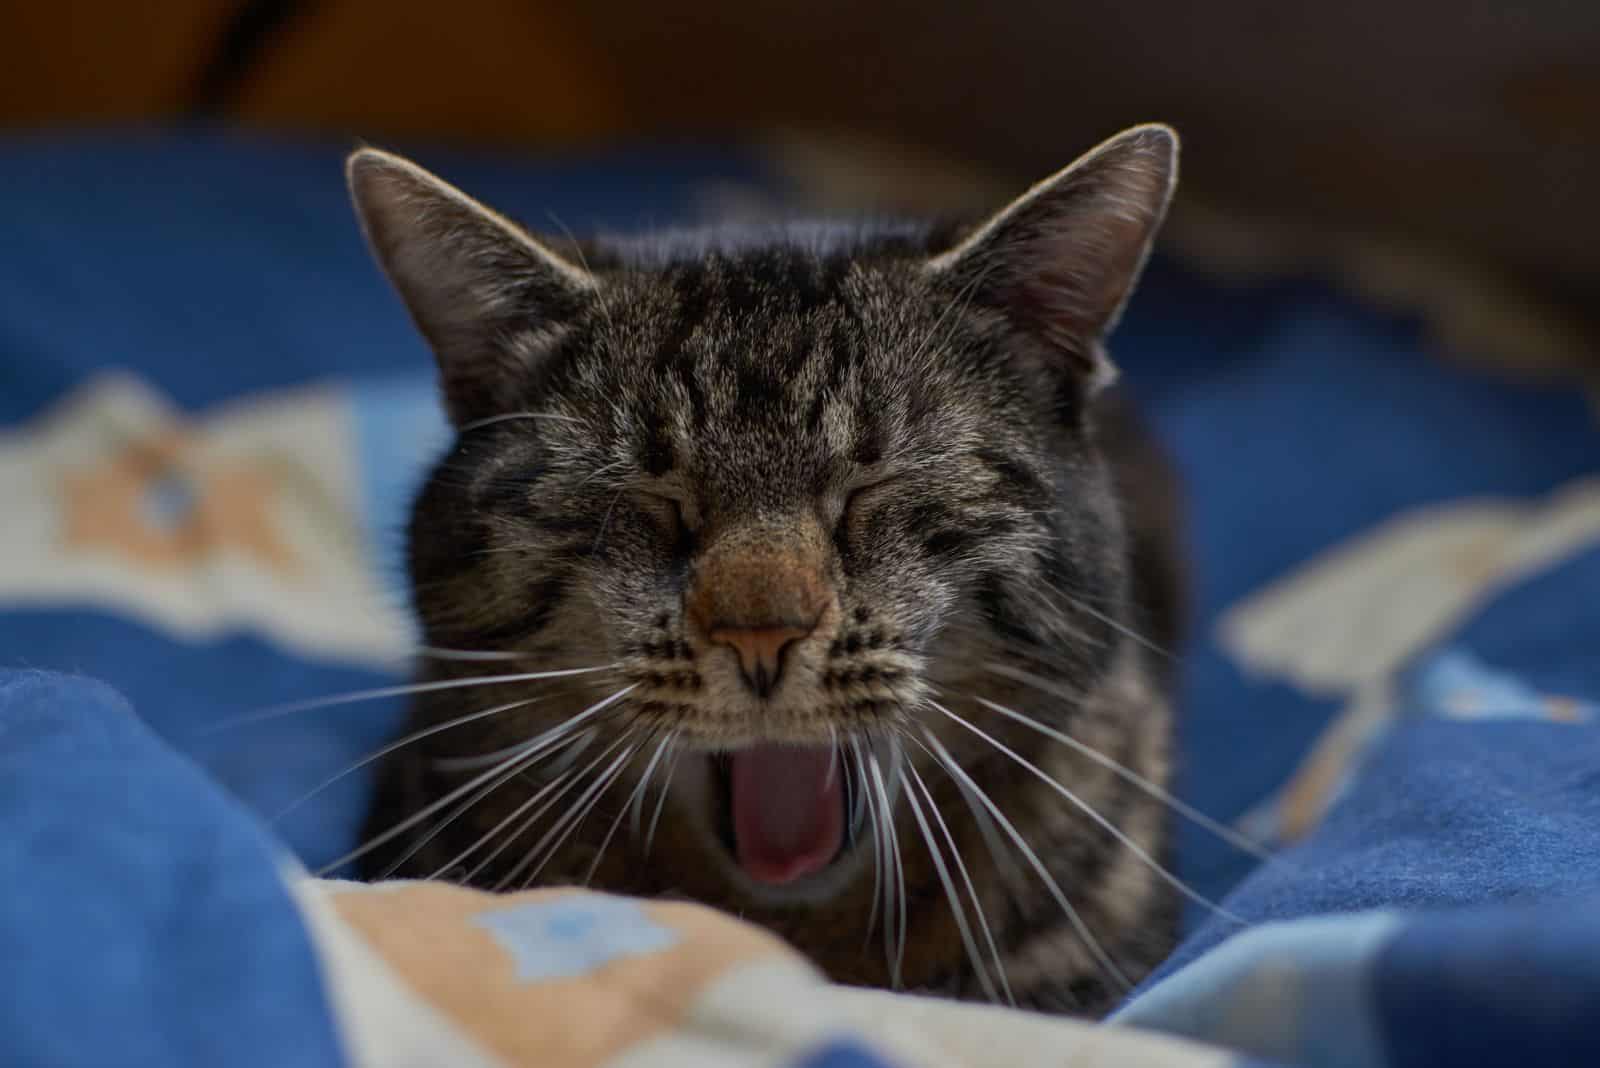 close-up photo of cat yawning